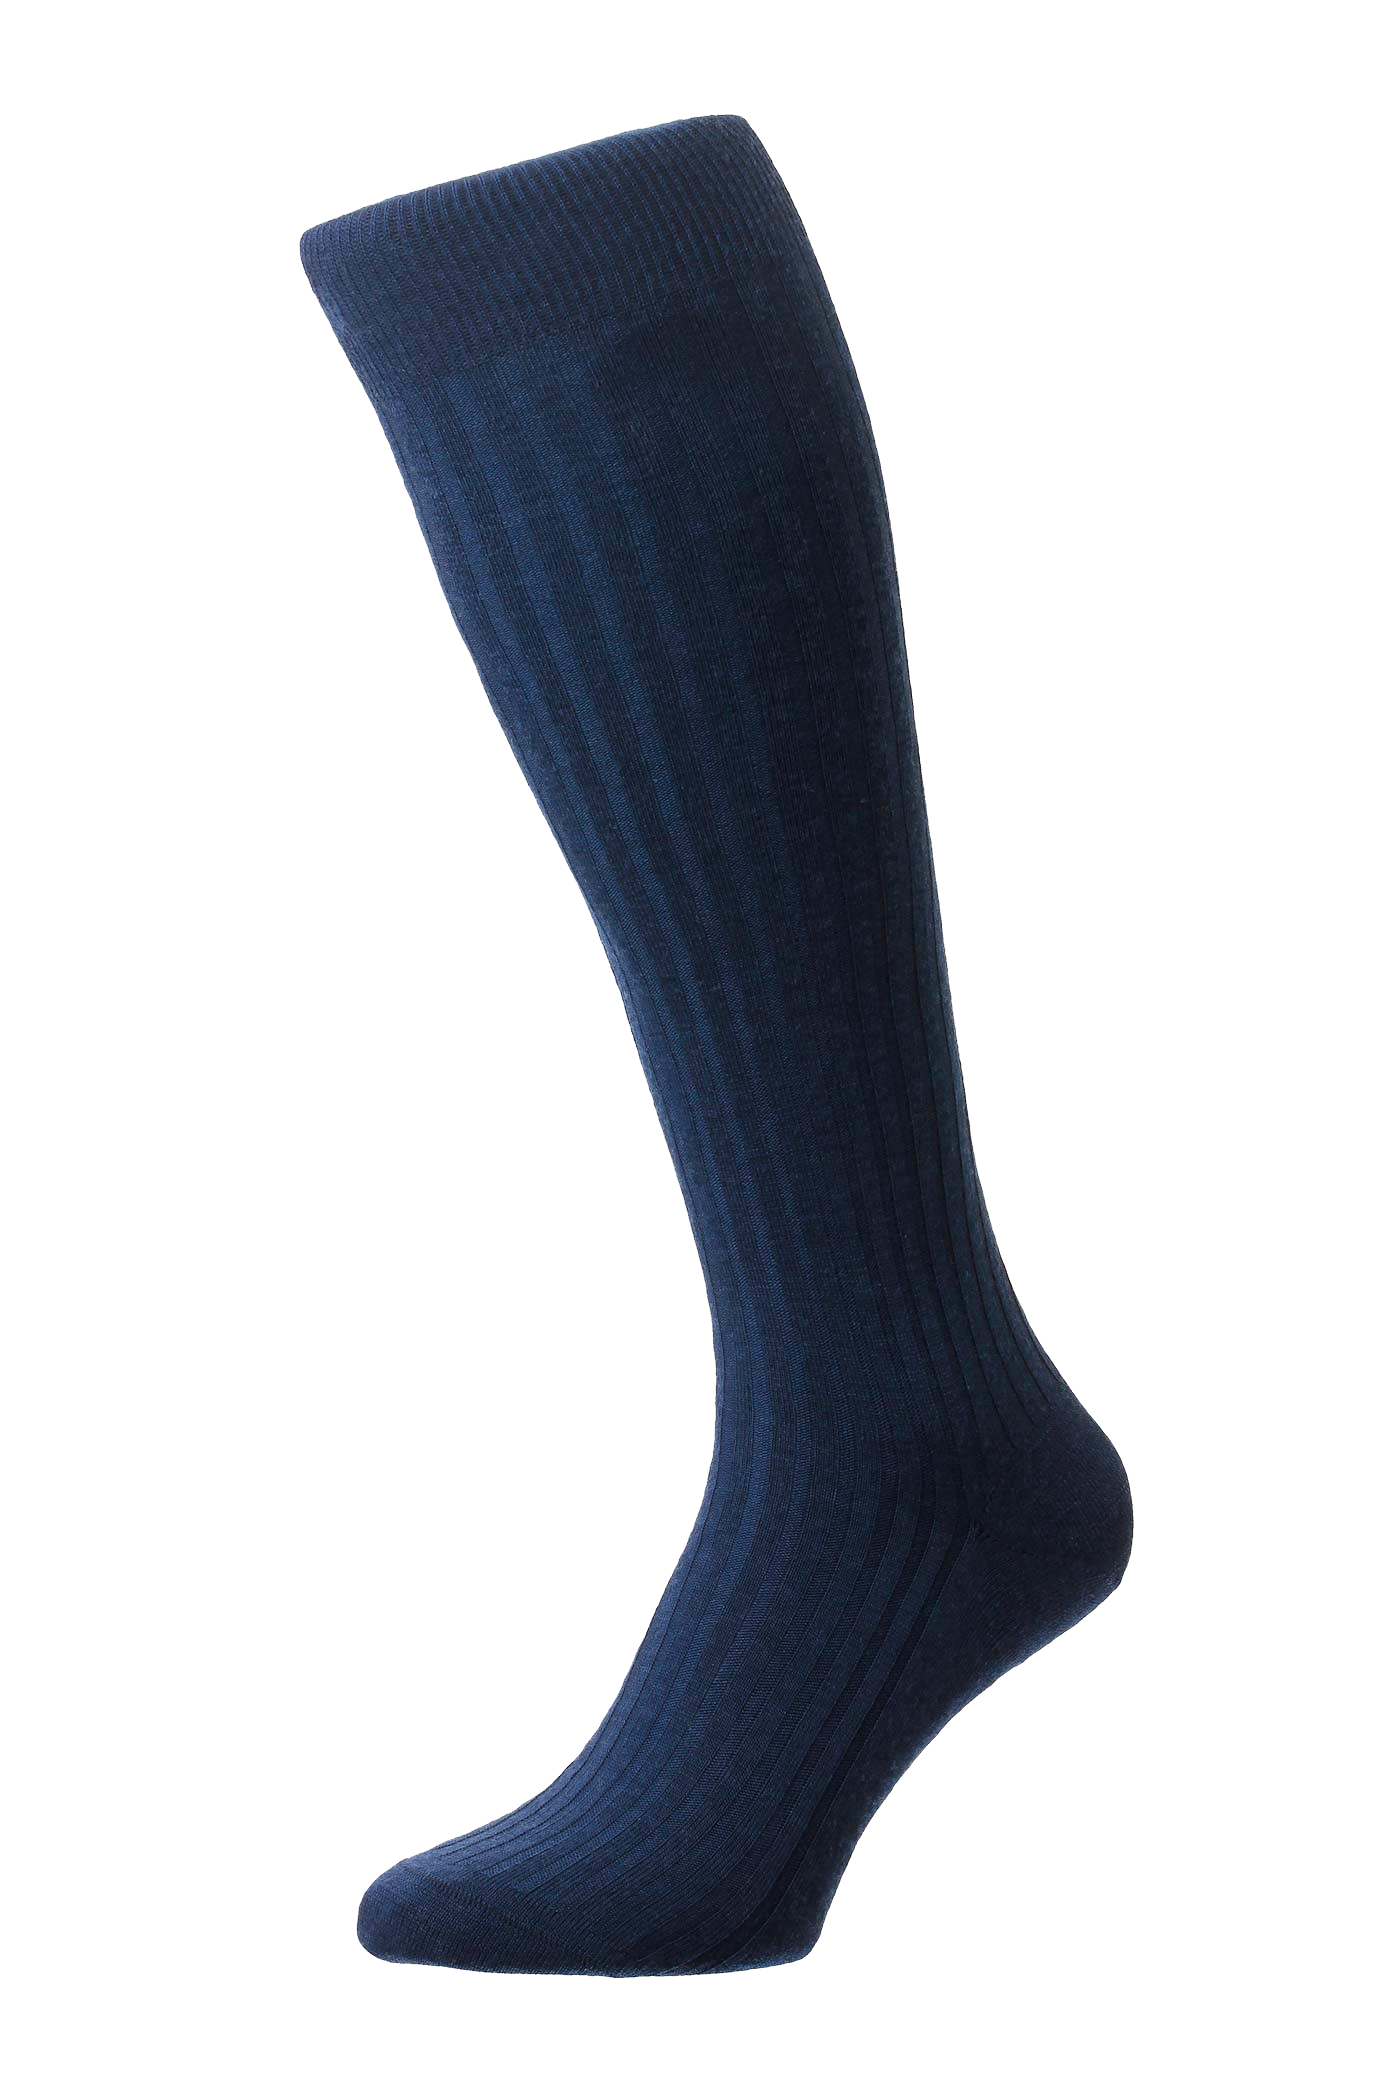 Panthrella, "Laburnum Navy", Over the Calf sock